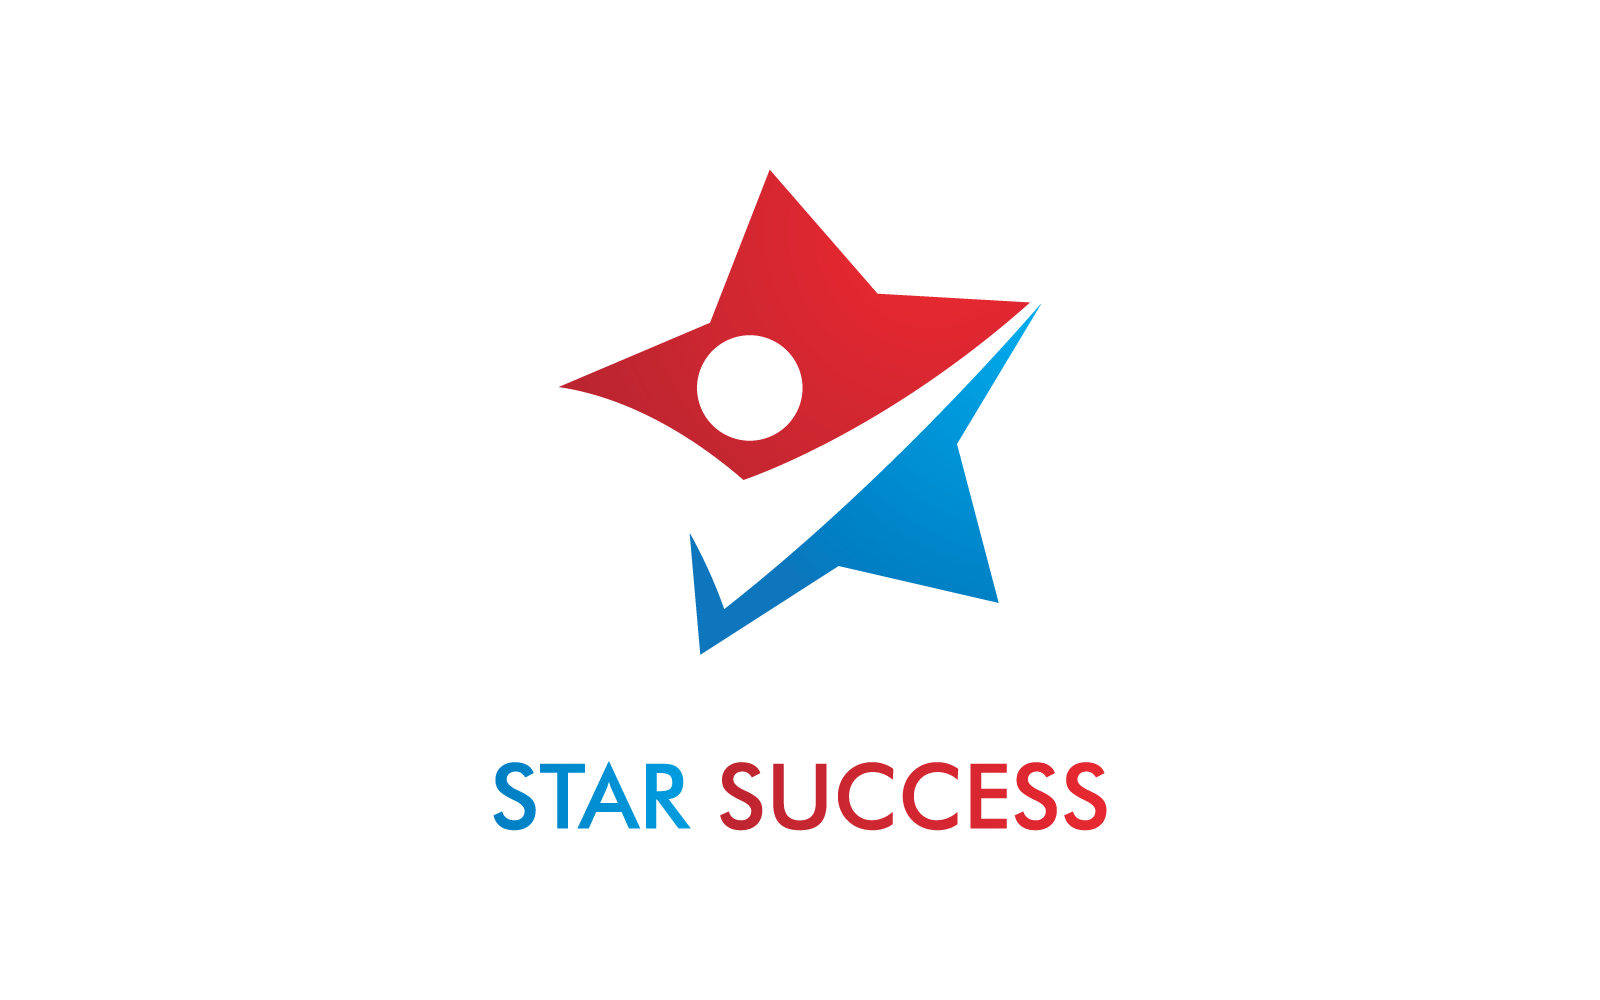 Star Success People illustration logo template